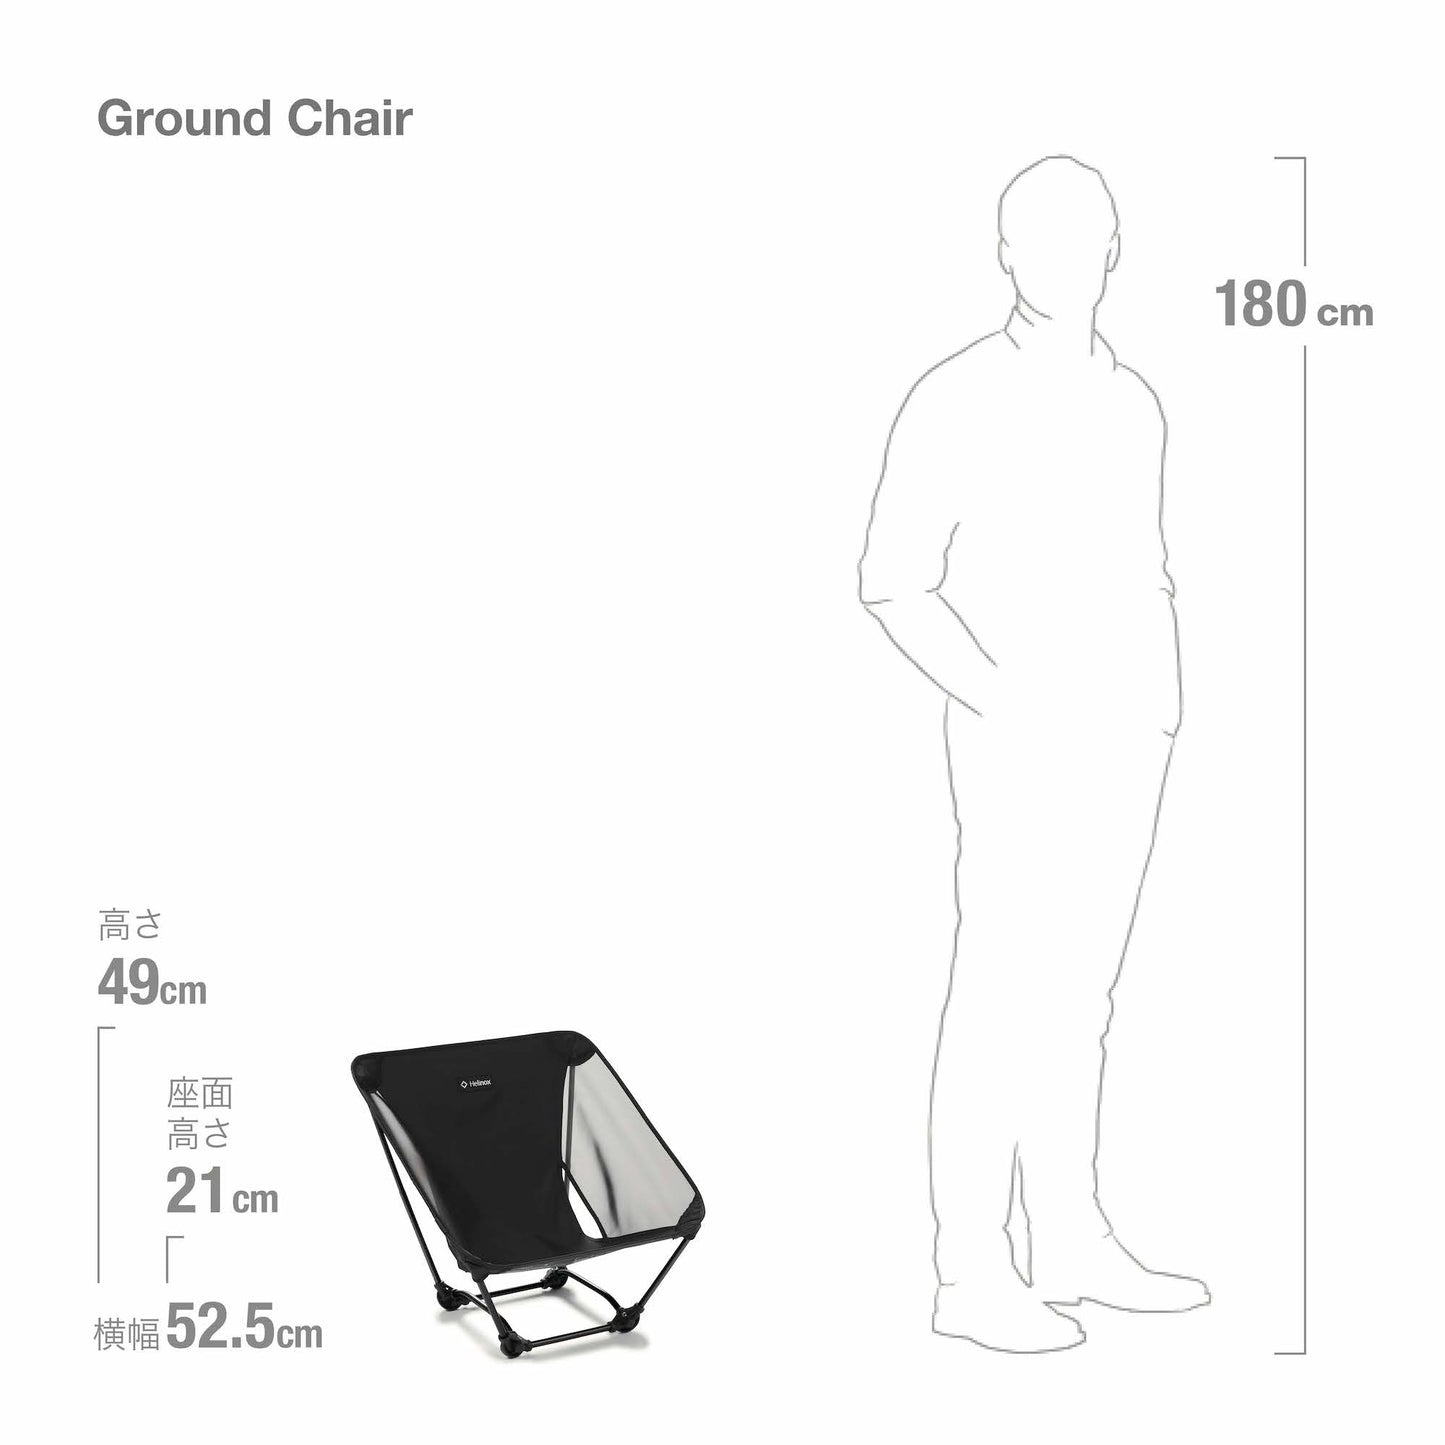 Ground Chair - All Black